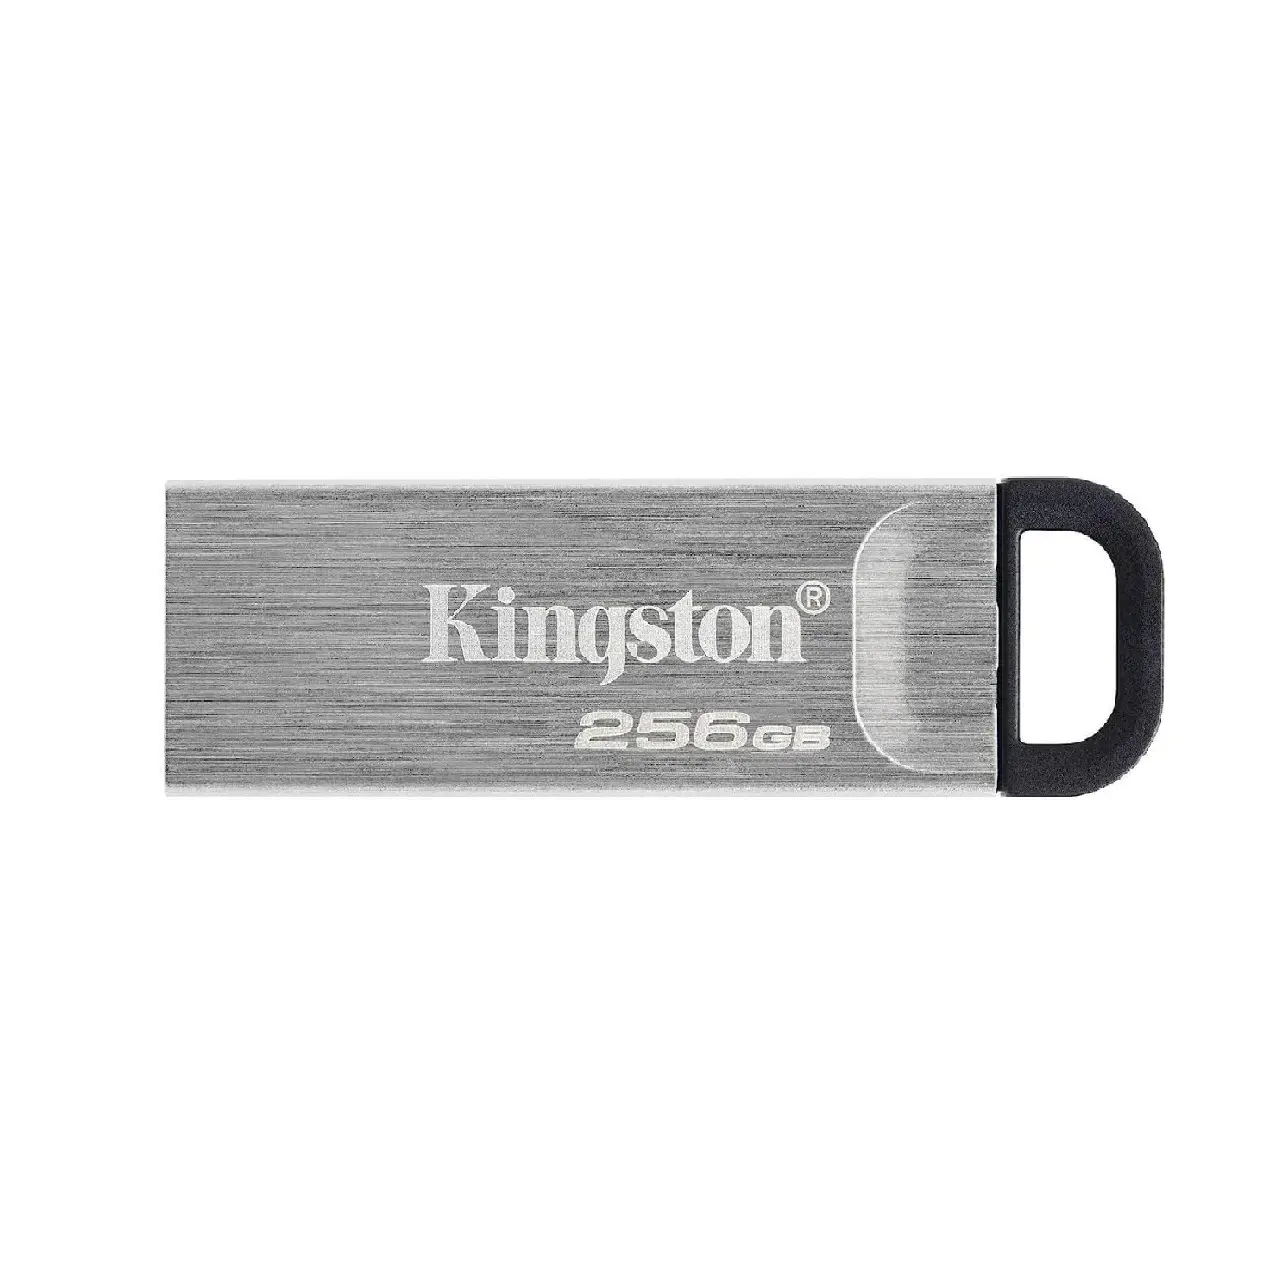 Kingston dtkn dữ liệu du lịch kyson 64GB 128GB 256GB 512GB hiệu suất cao USB 3.2 kim loại ổ đĩa flash